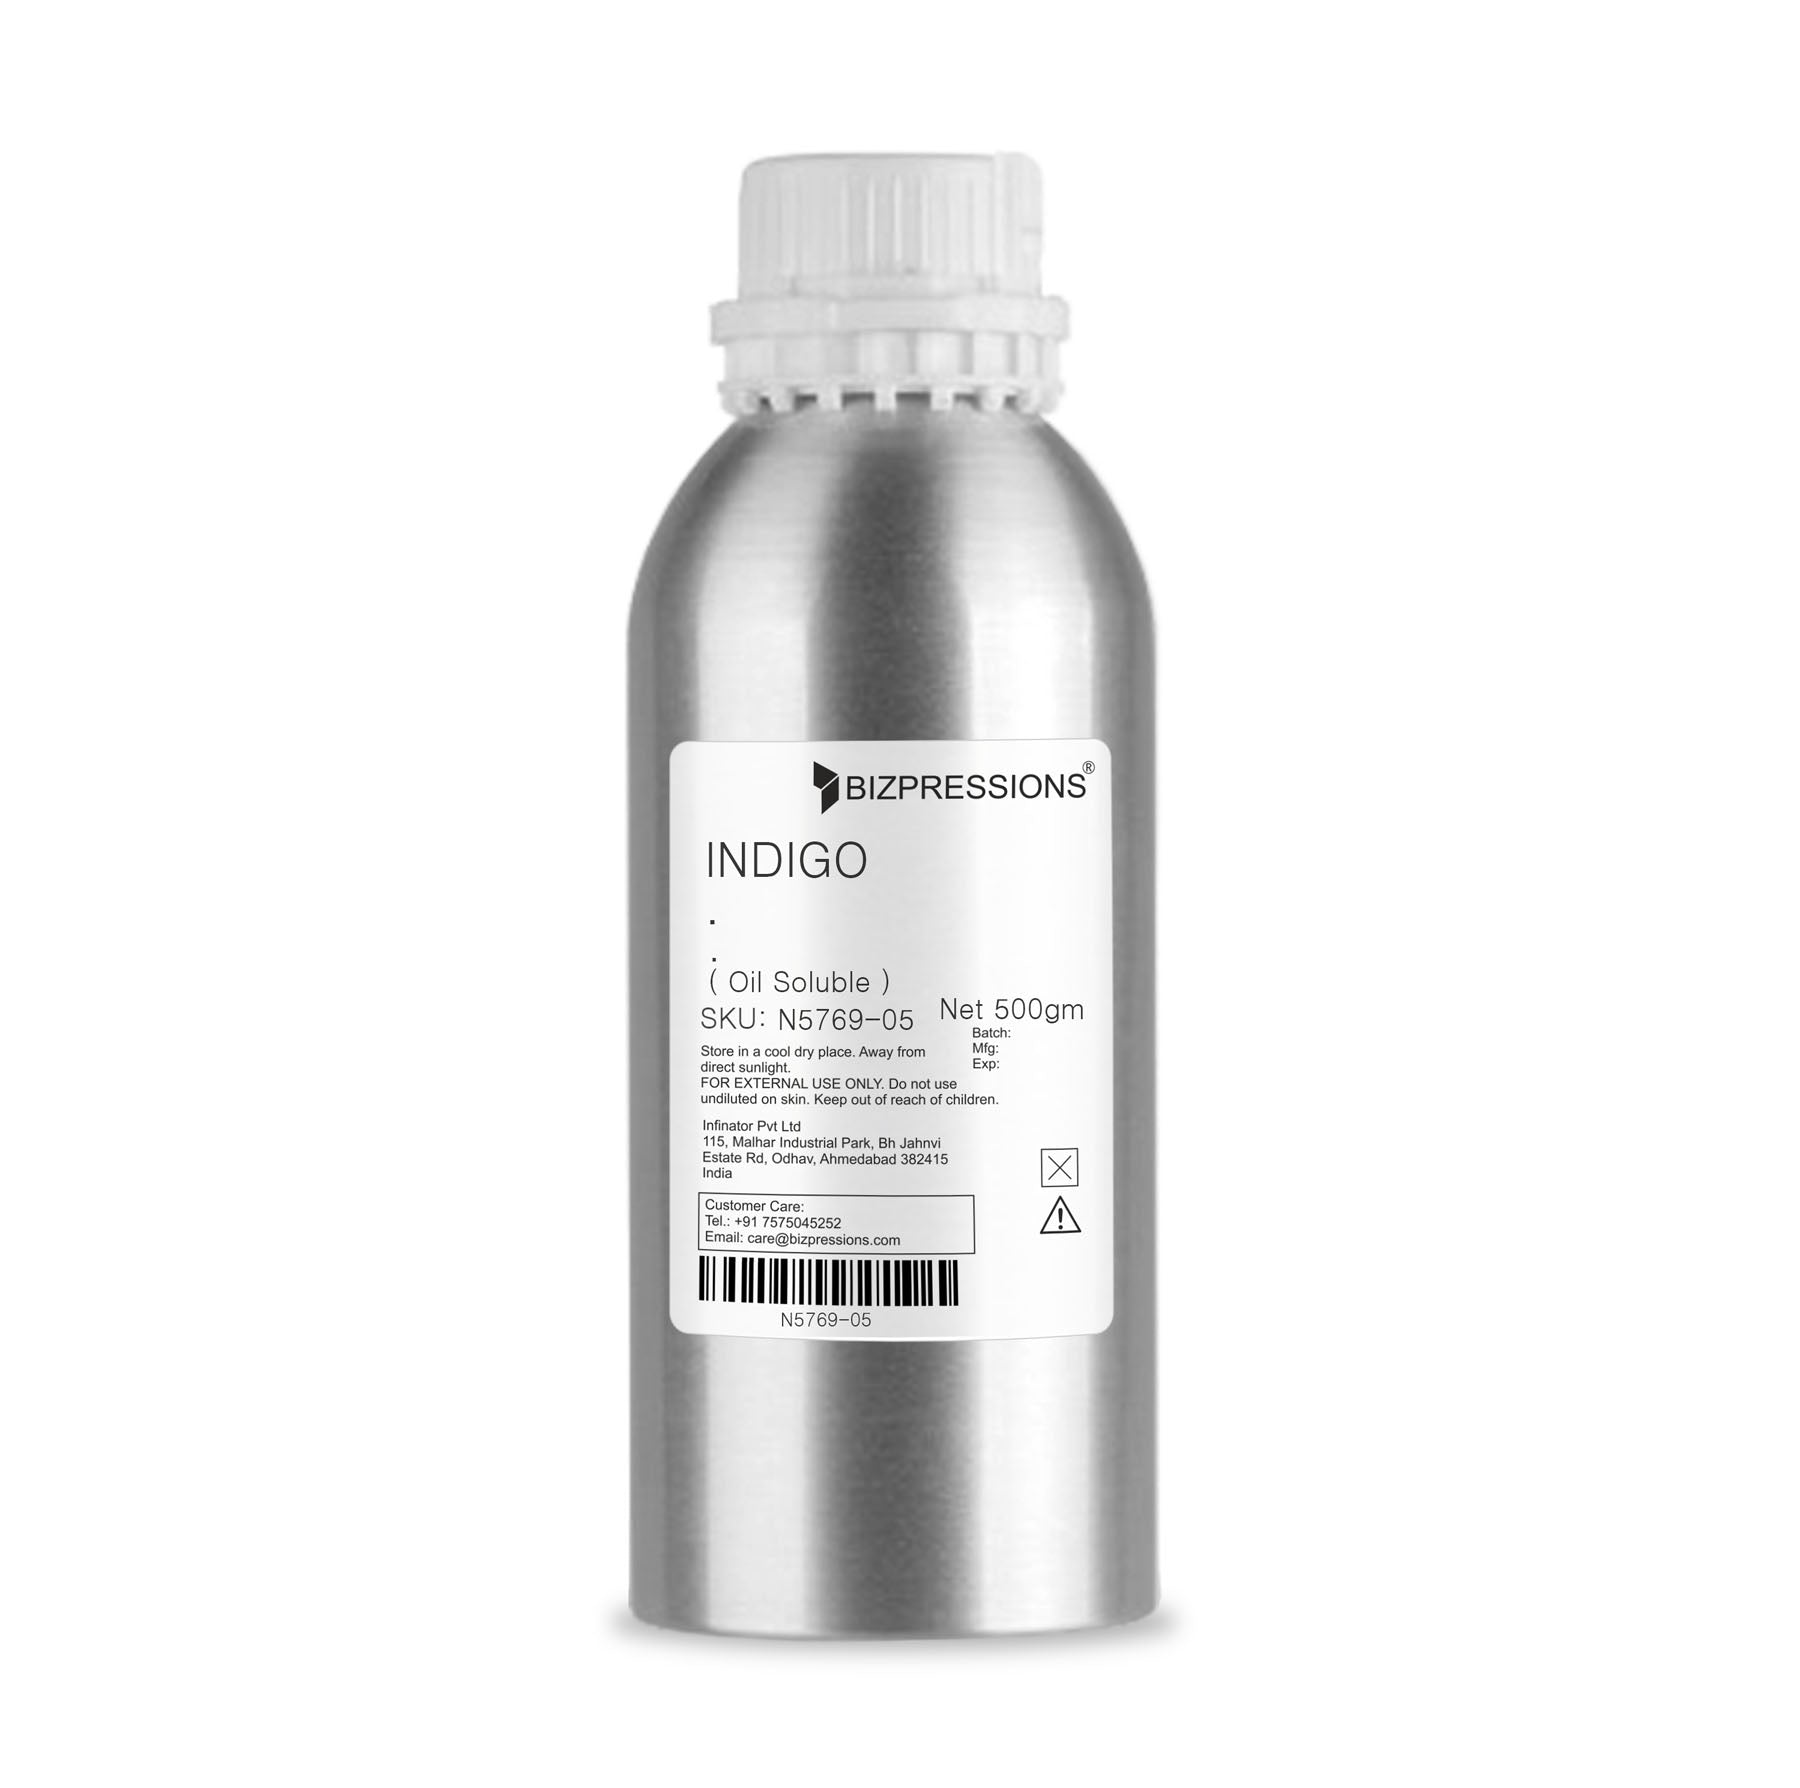 INDIGO - Fragrance ( Oil Soluble ) - 500 gm